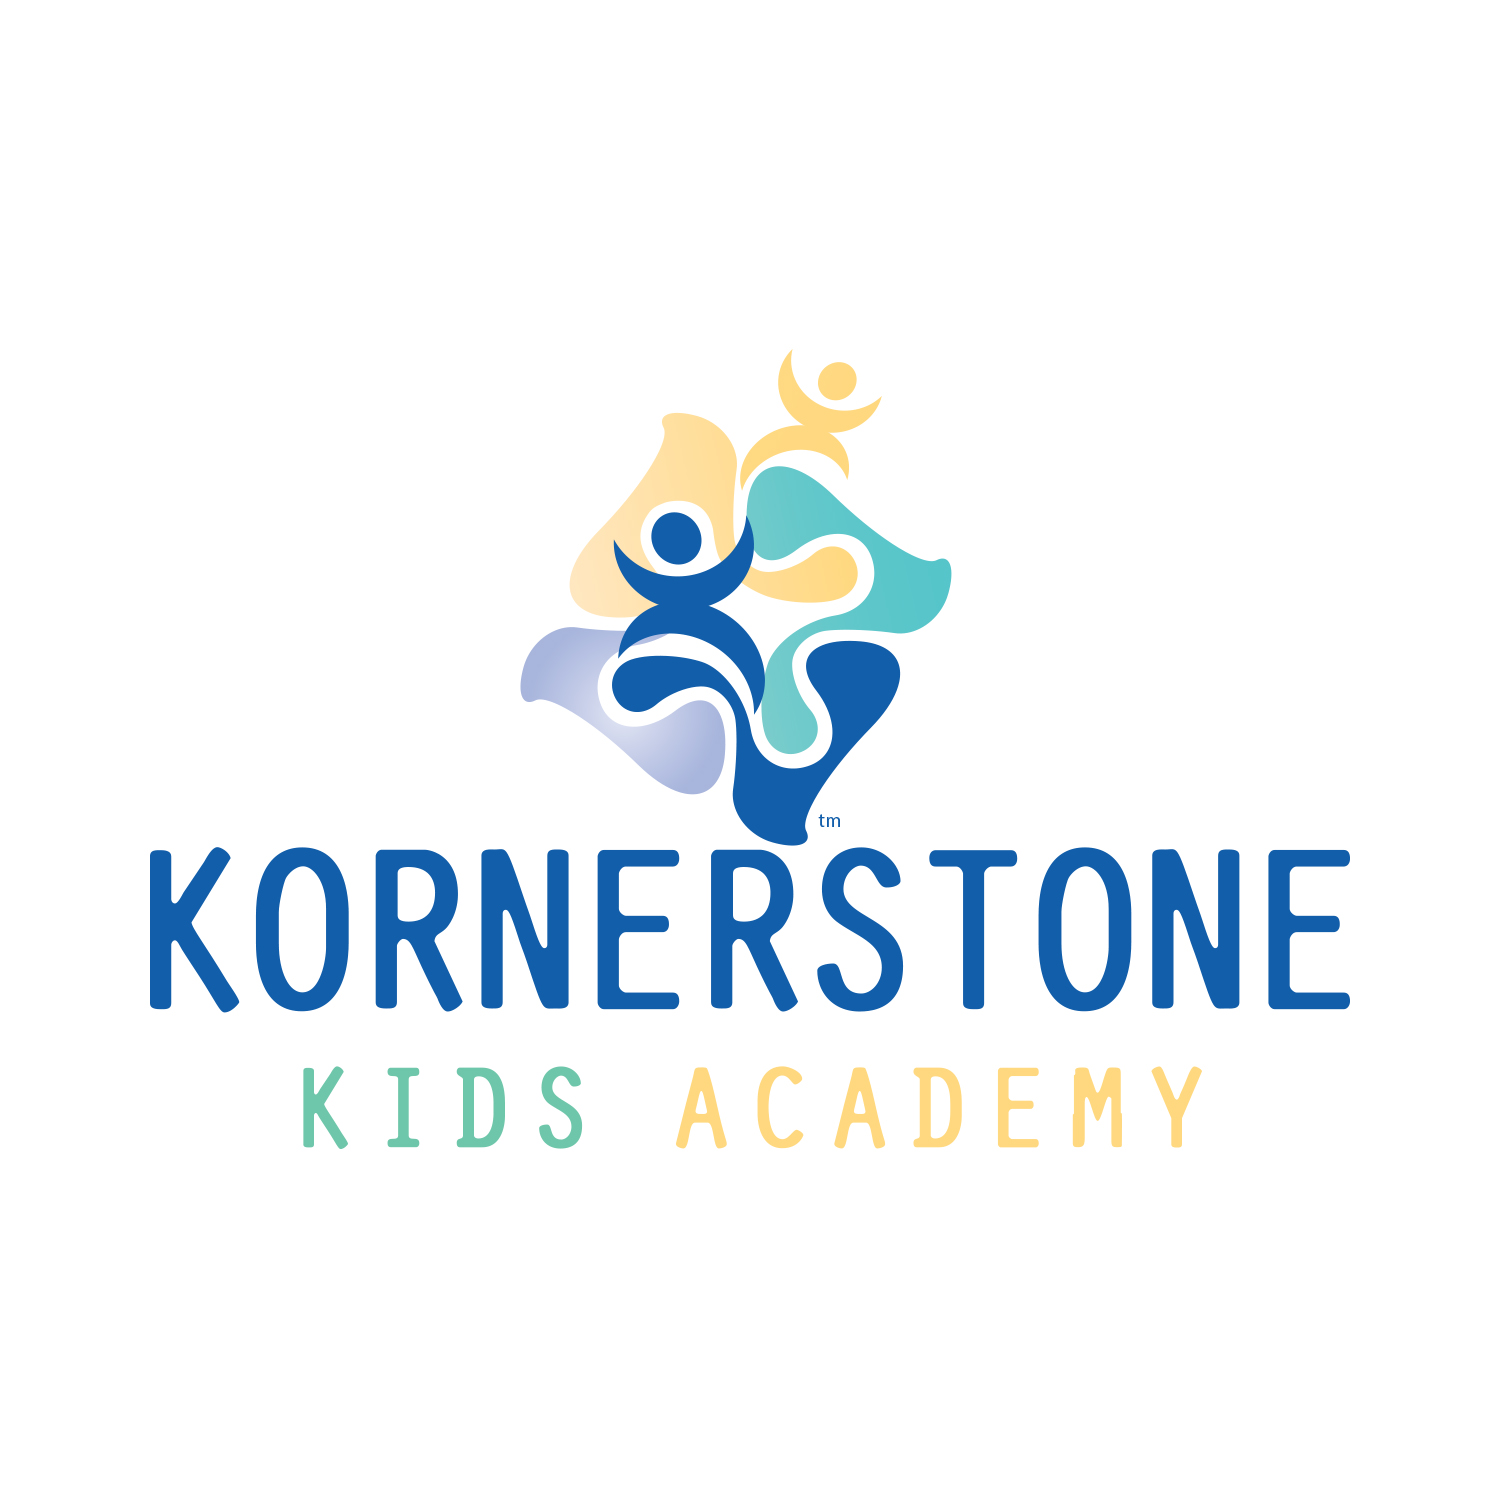 Kornerstone Kids Academy